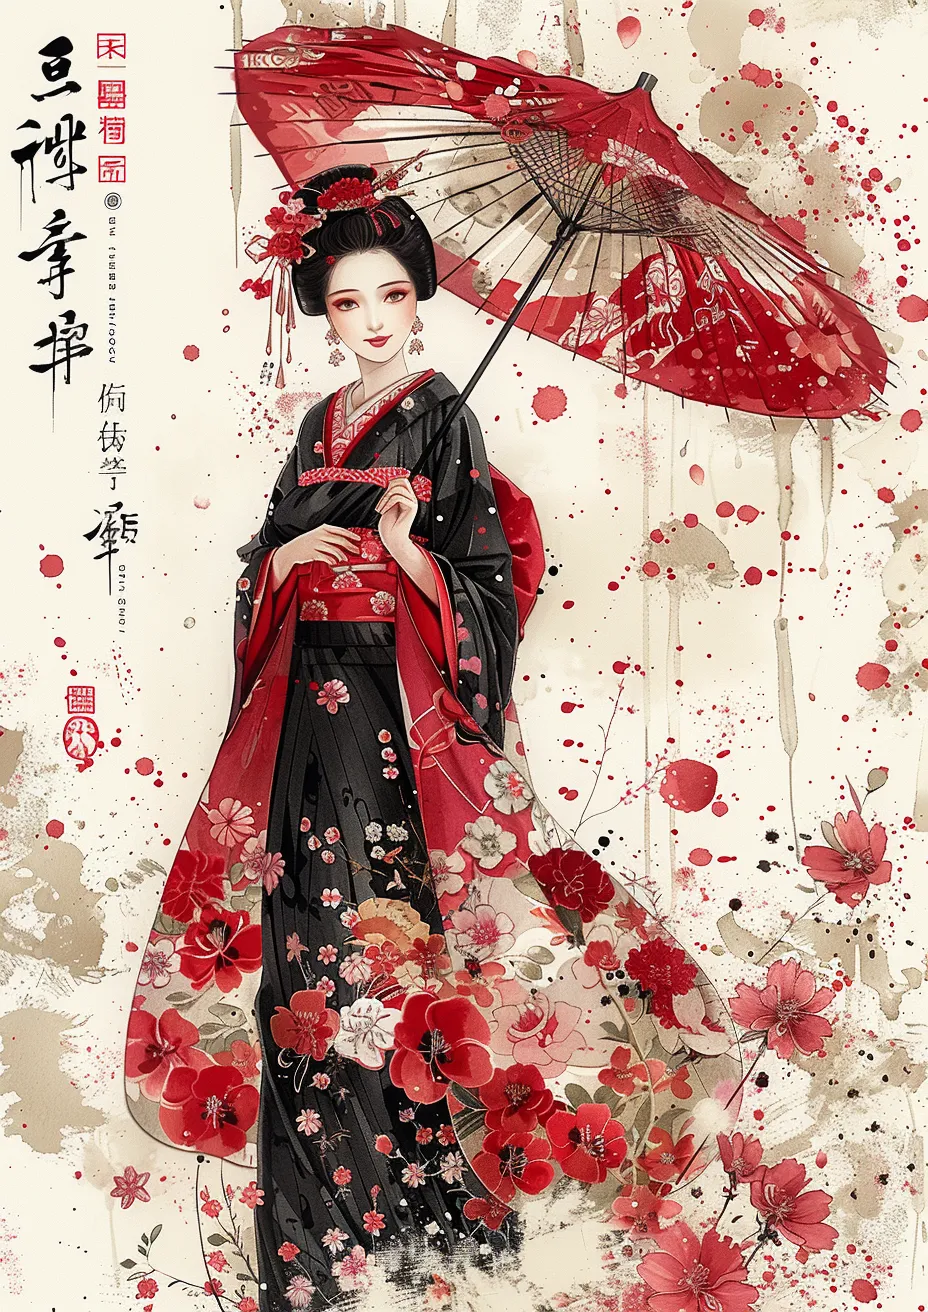 kimono_umbrella_bow_groom_jinrikisha_agaric_shoji_dragonfly_sombrero_mushroom_Japan_169677